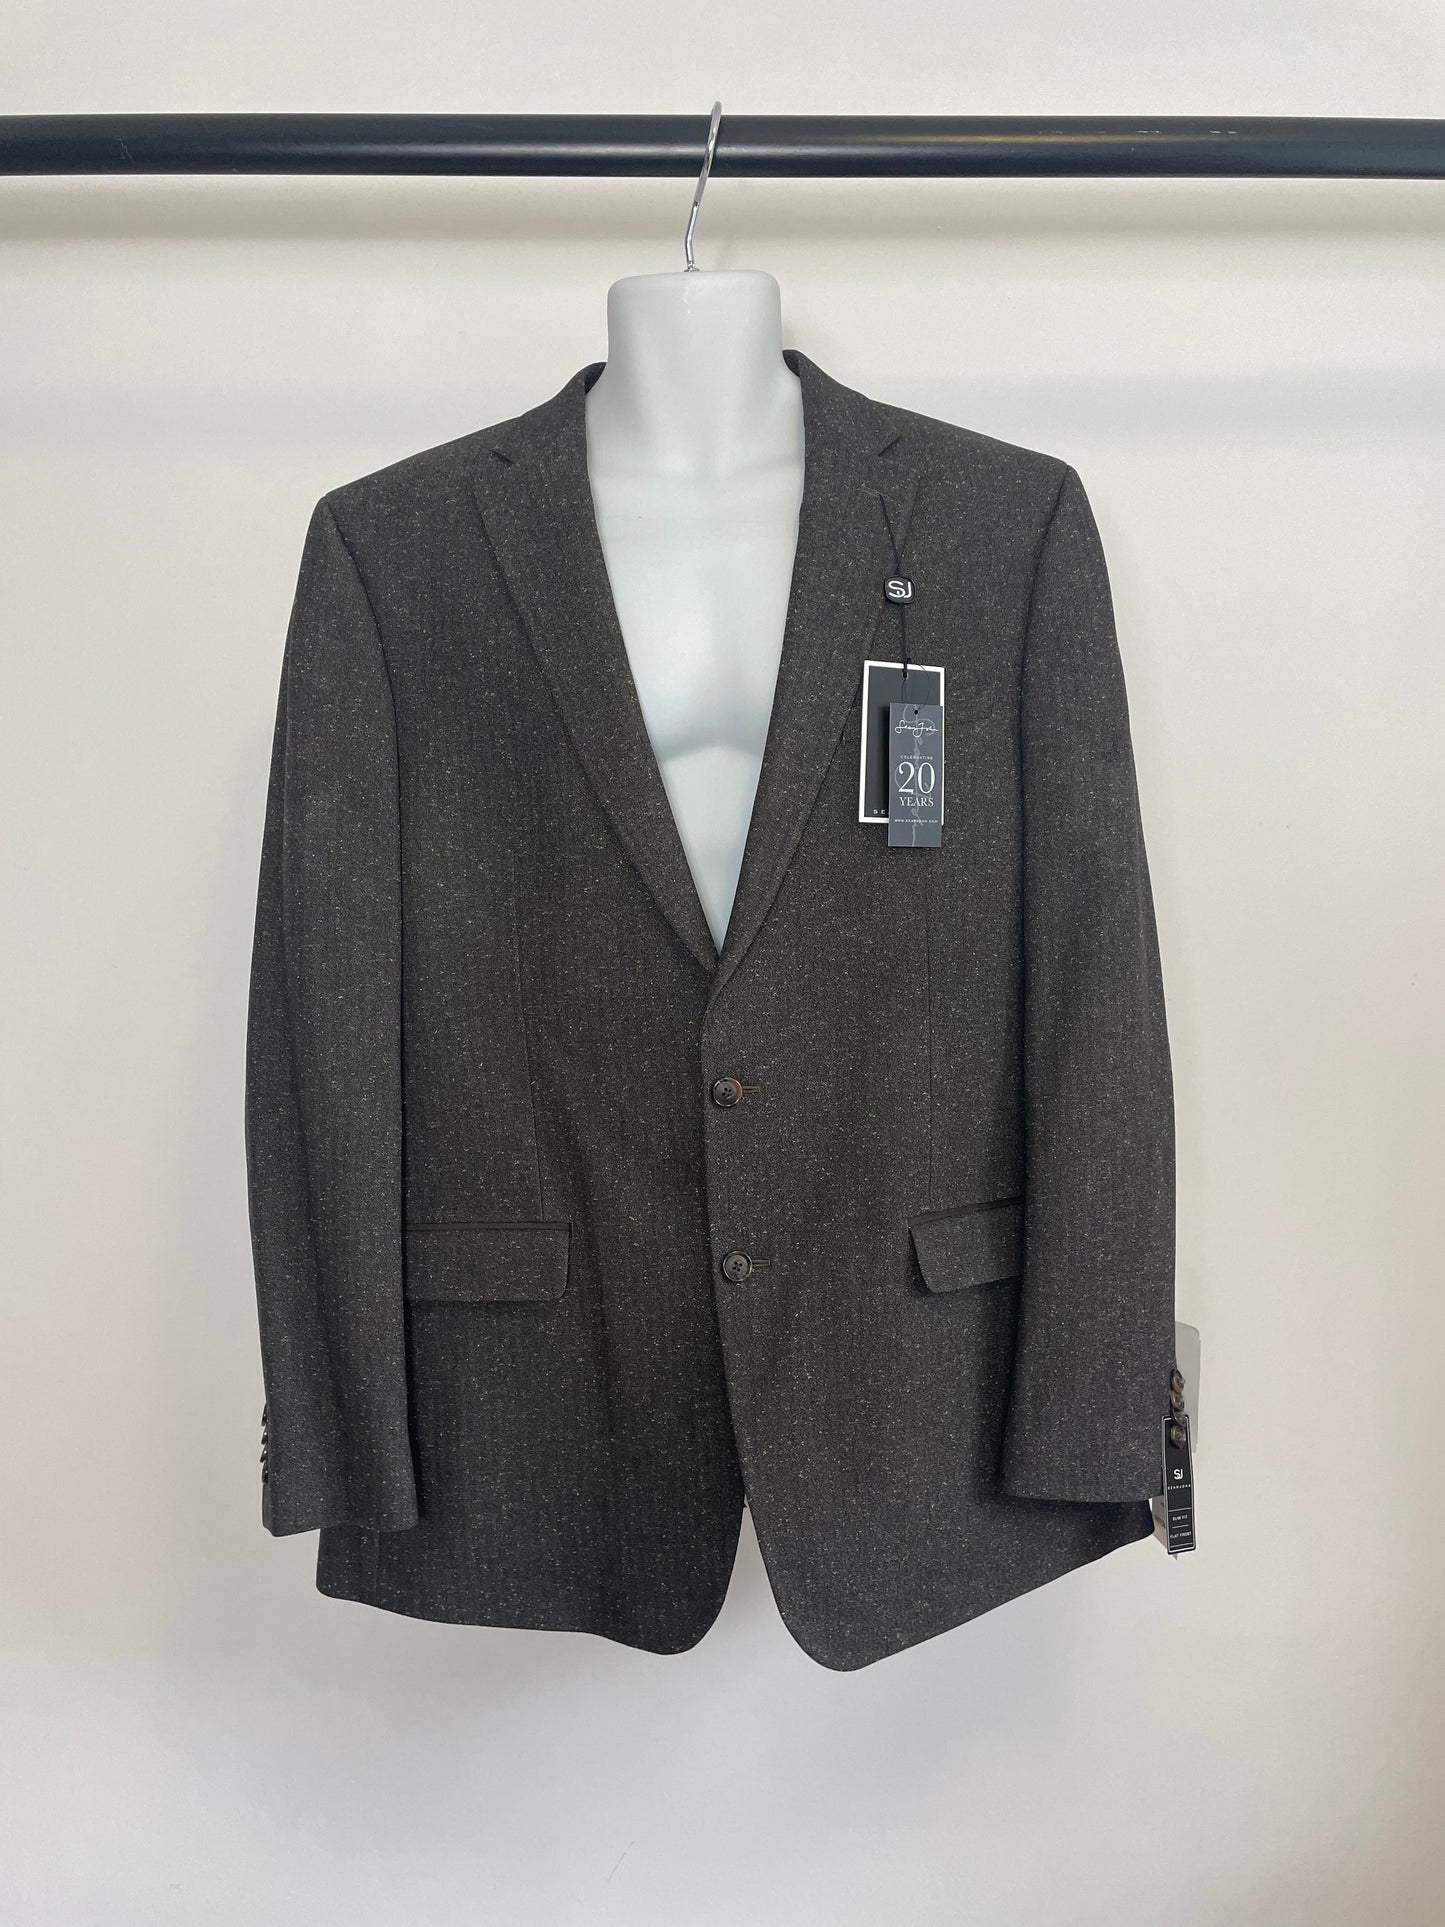 Men's Glen Plaid Suit Jacket Blazer Sport Coat Grey 46L